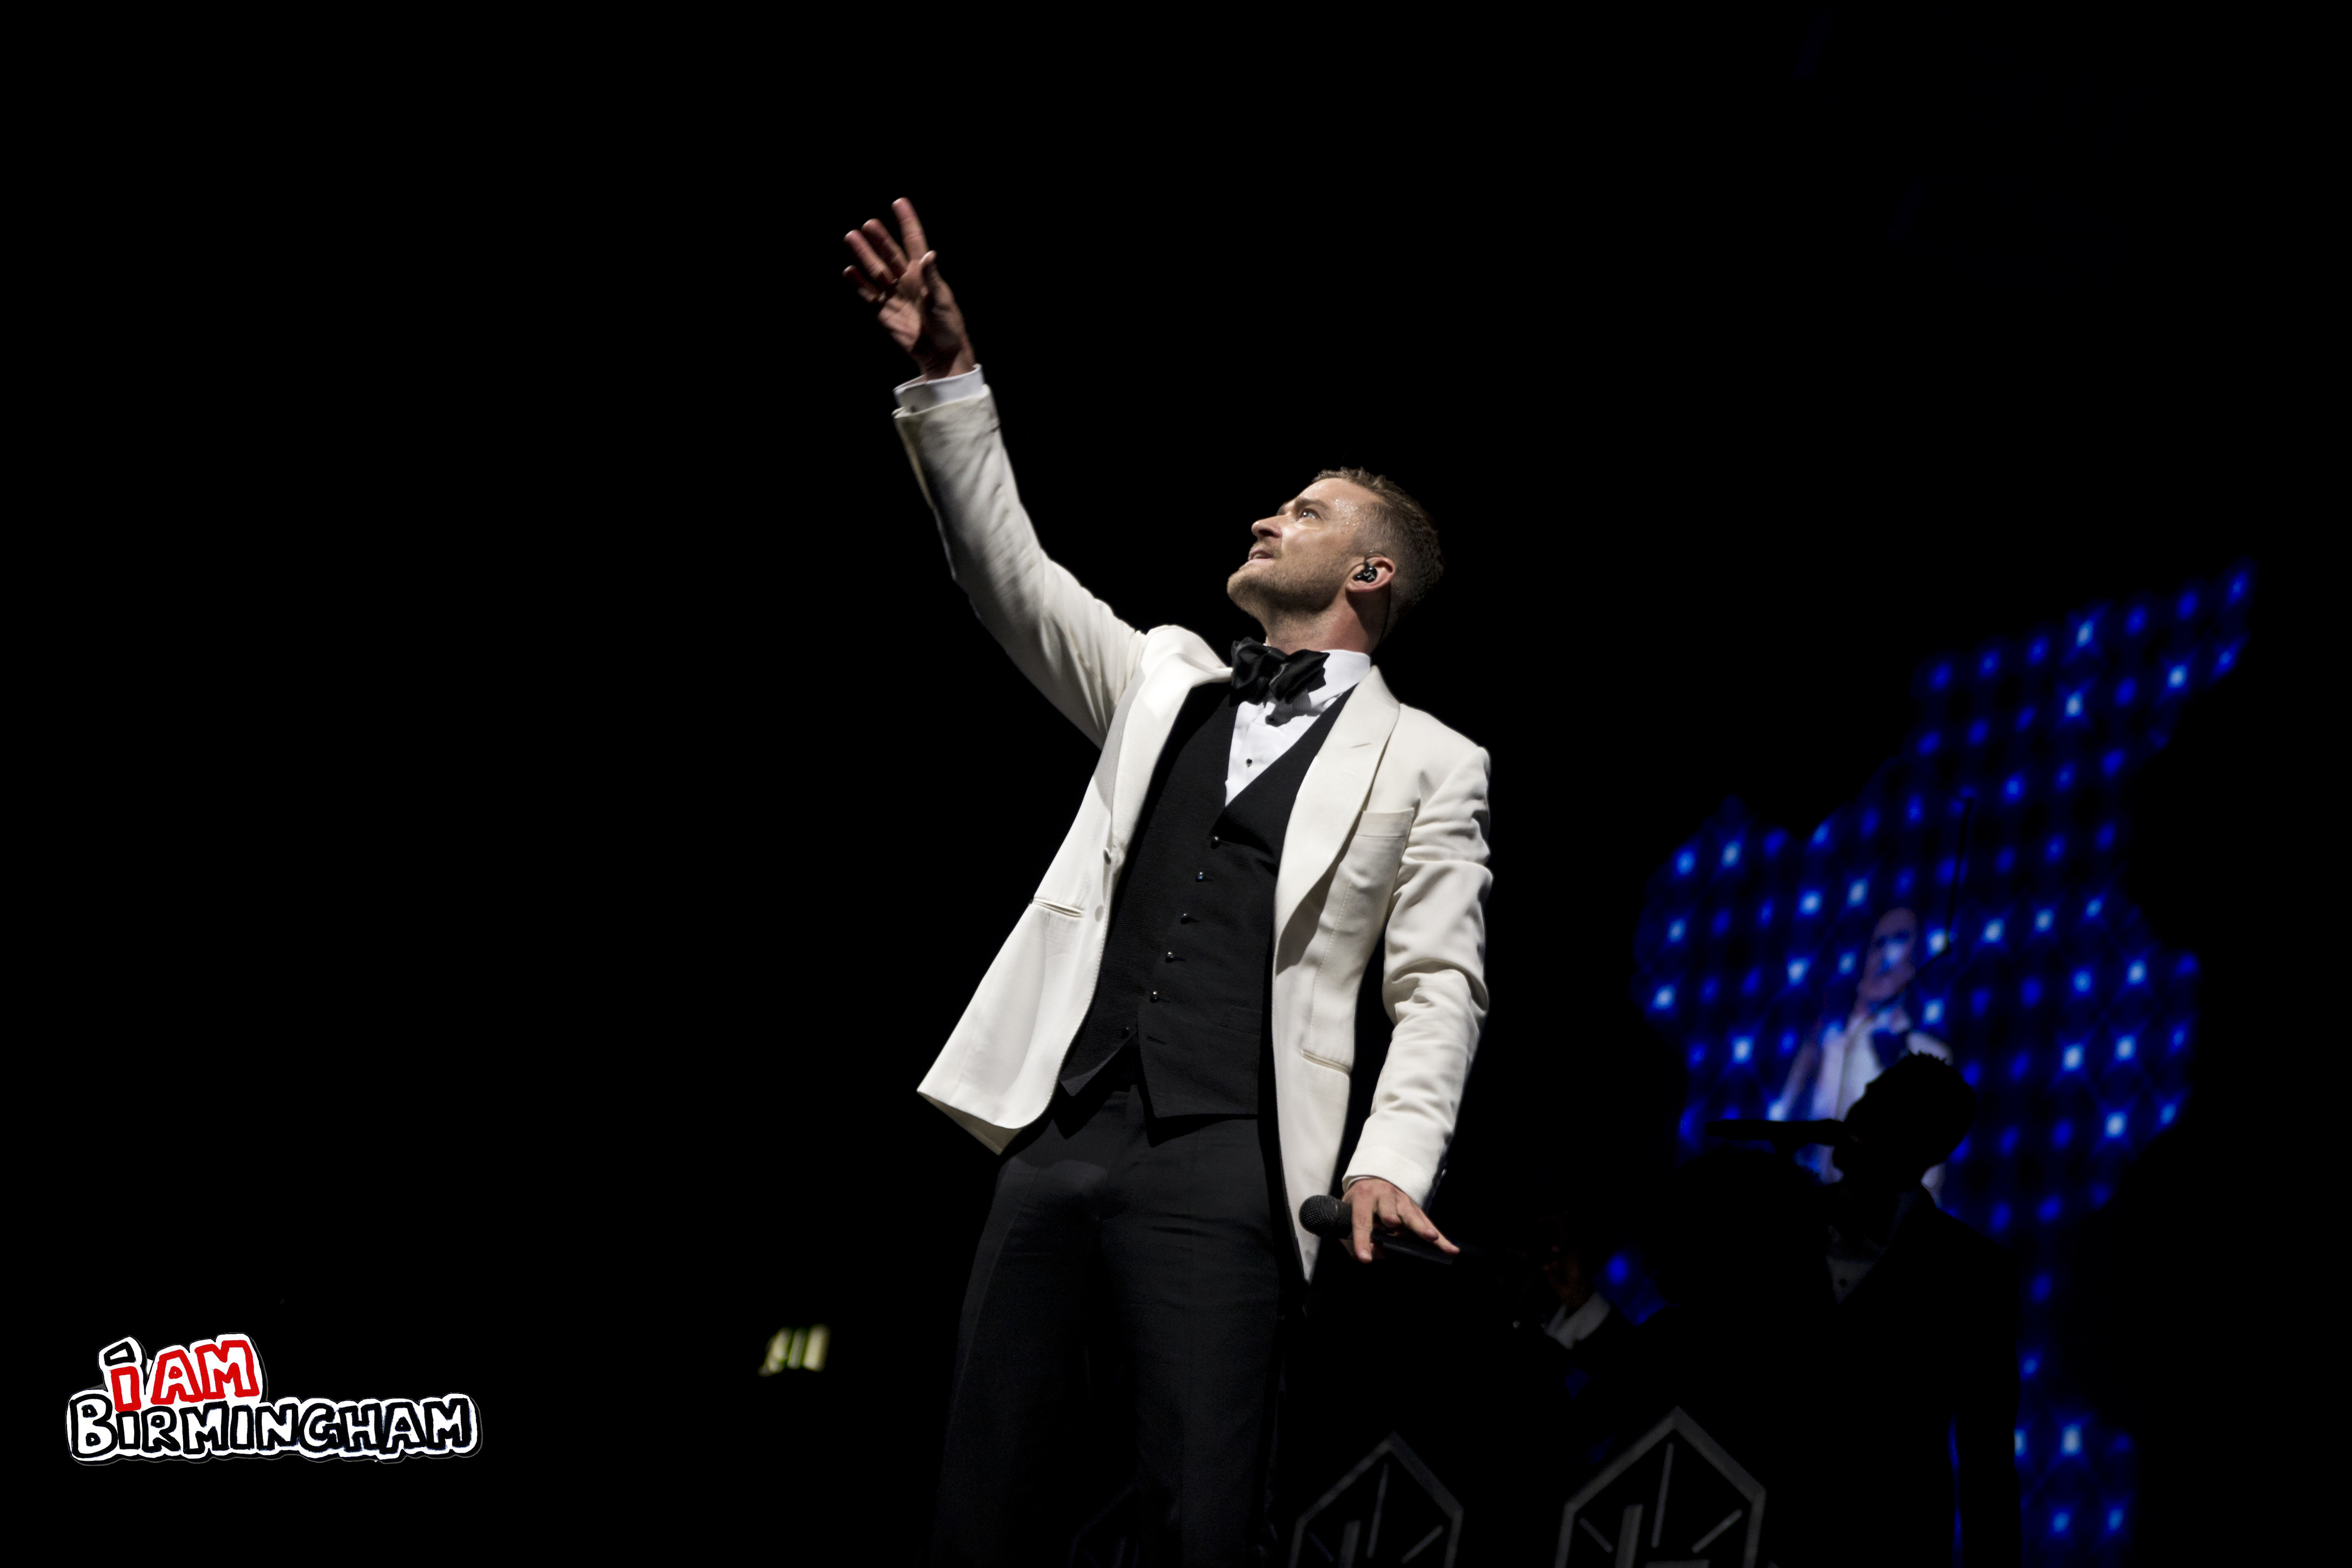 World-wide phenomenon Justin Timberlake filled the LG Arena 